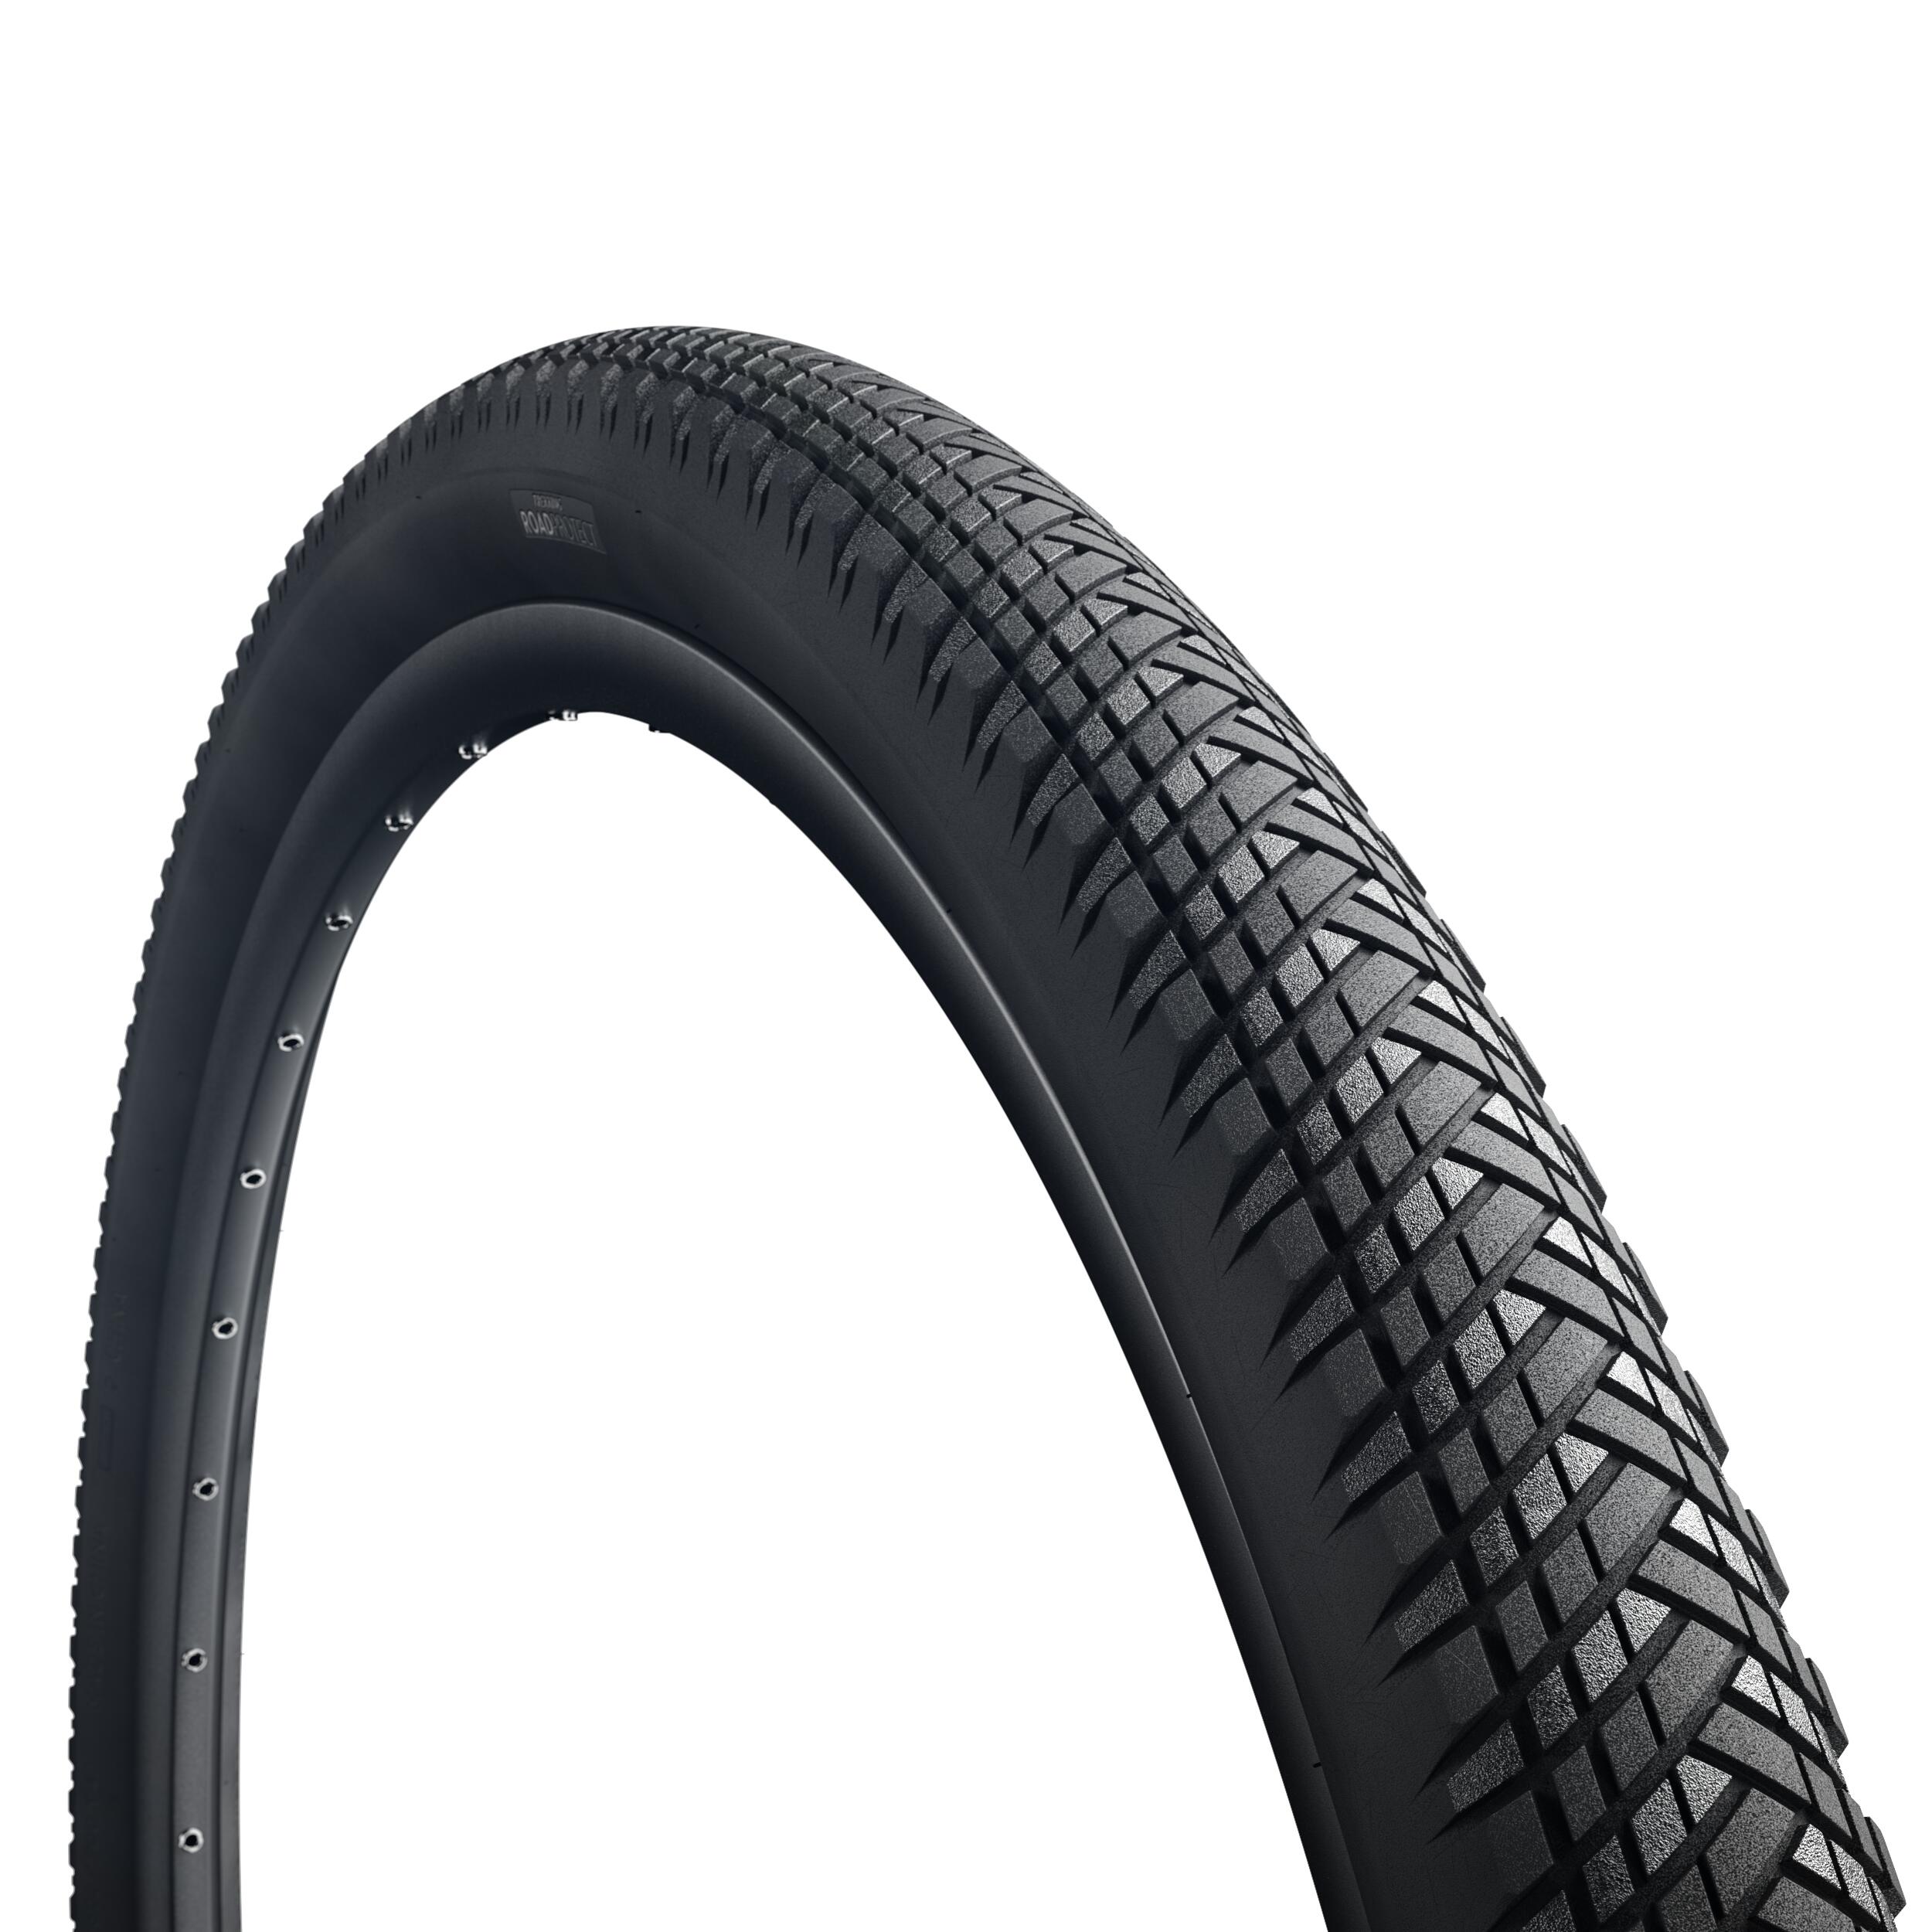 RIVERSIDE 28" x 1.85" (700 x 47) Trekking Hybrid Bike Tyre RoadProtect / ETRTO 47-622